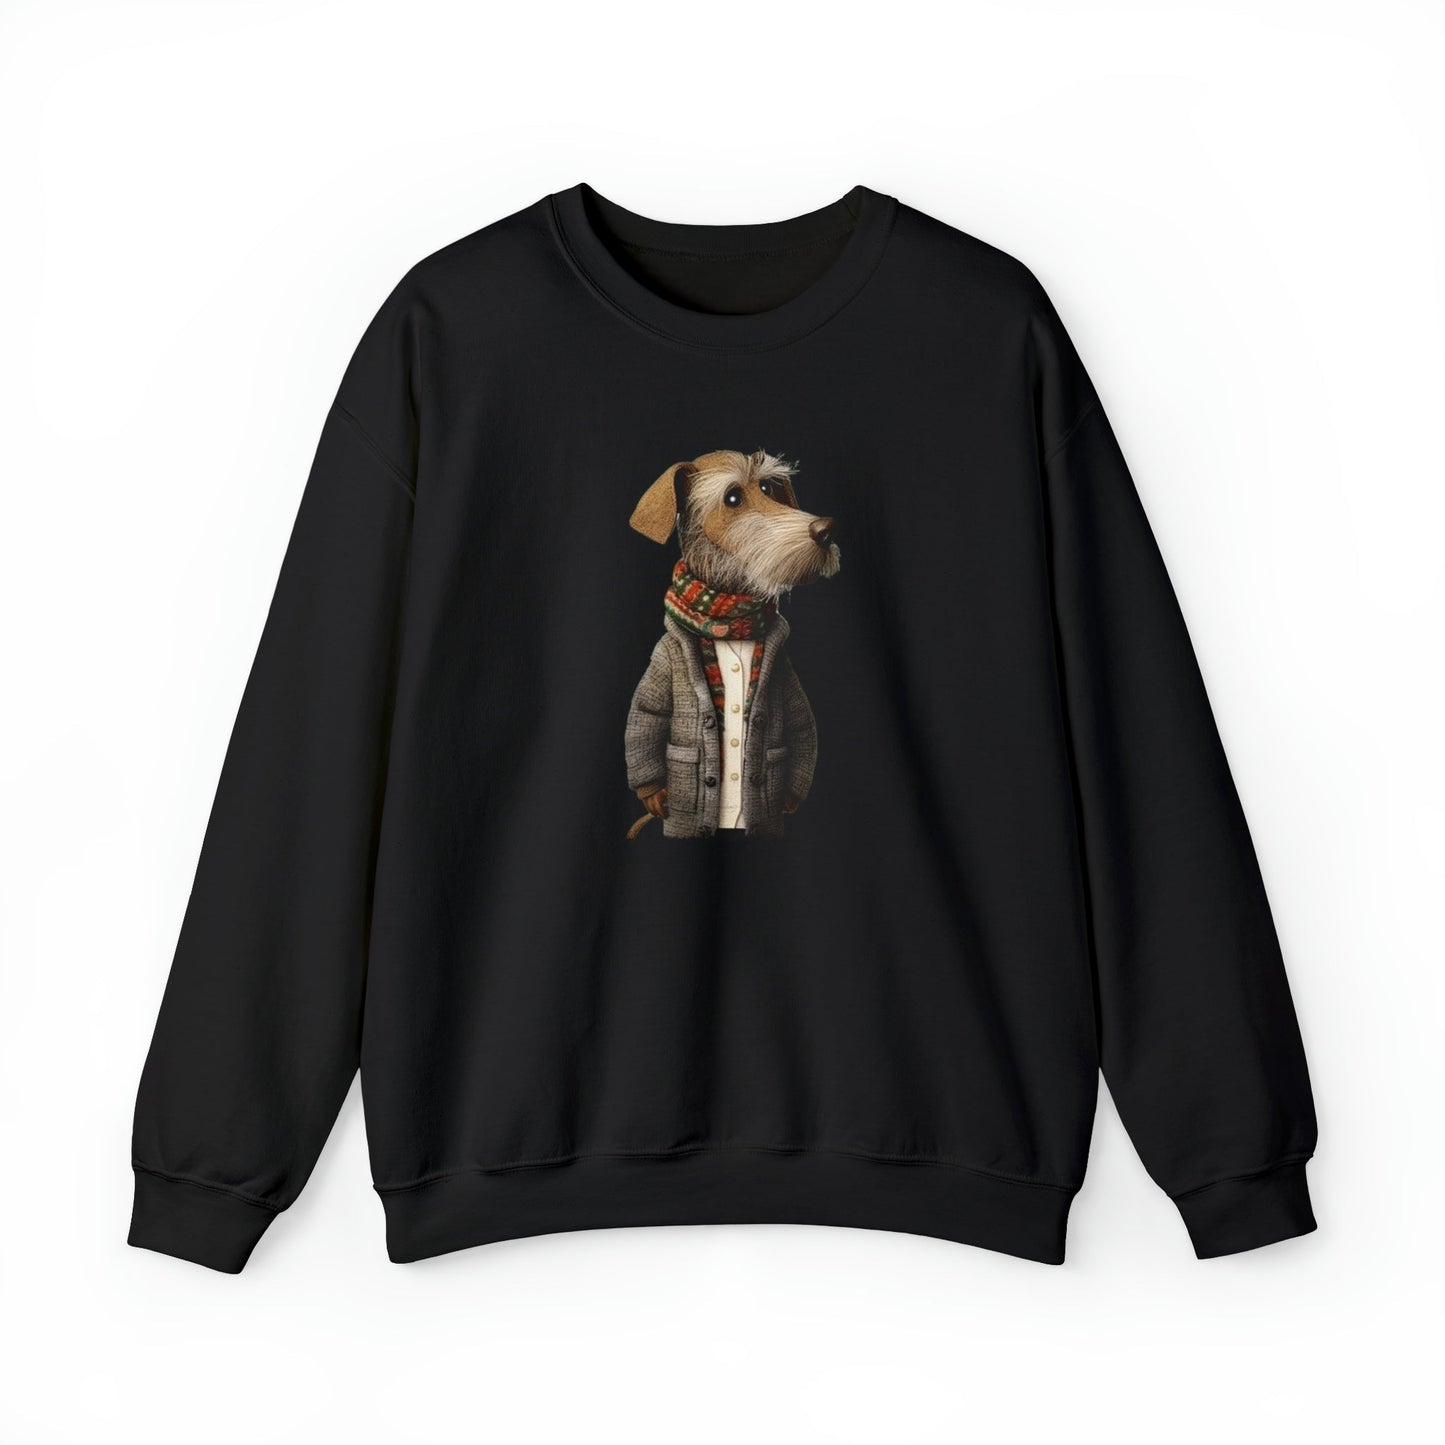 Terrier Dog Sweatshirt, Dogs in Sweaters Art Collection, Unique Boho Design Shirt - FlooredByArt